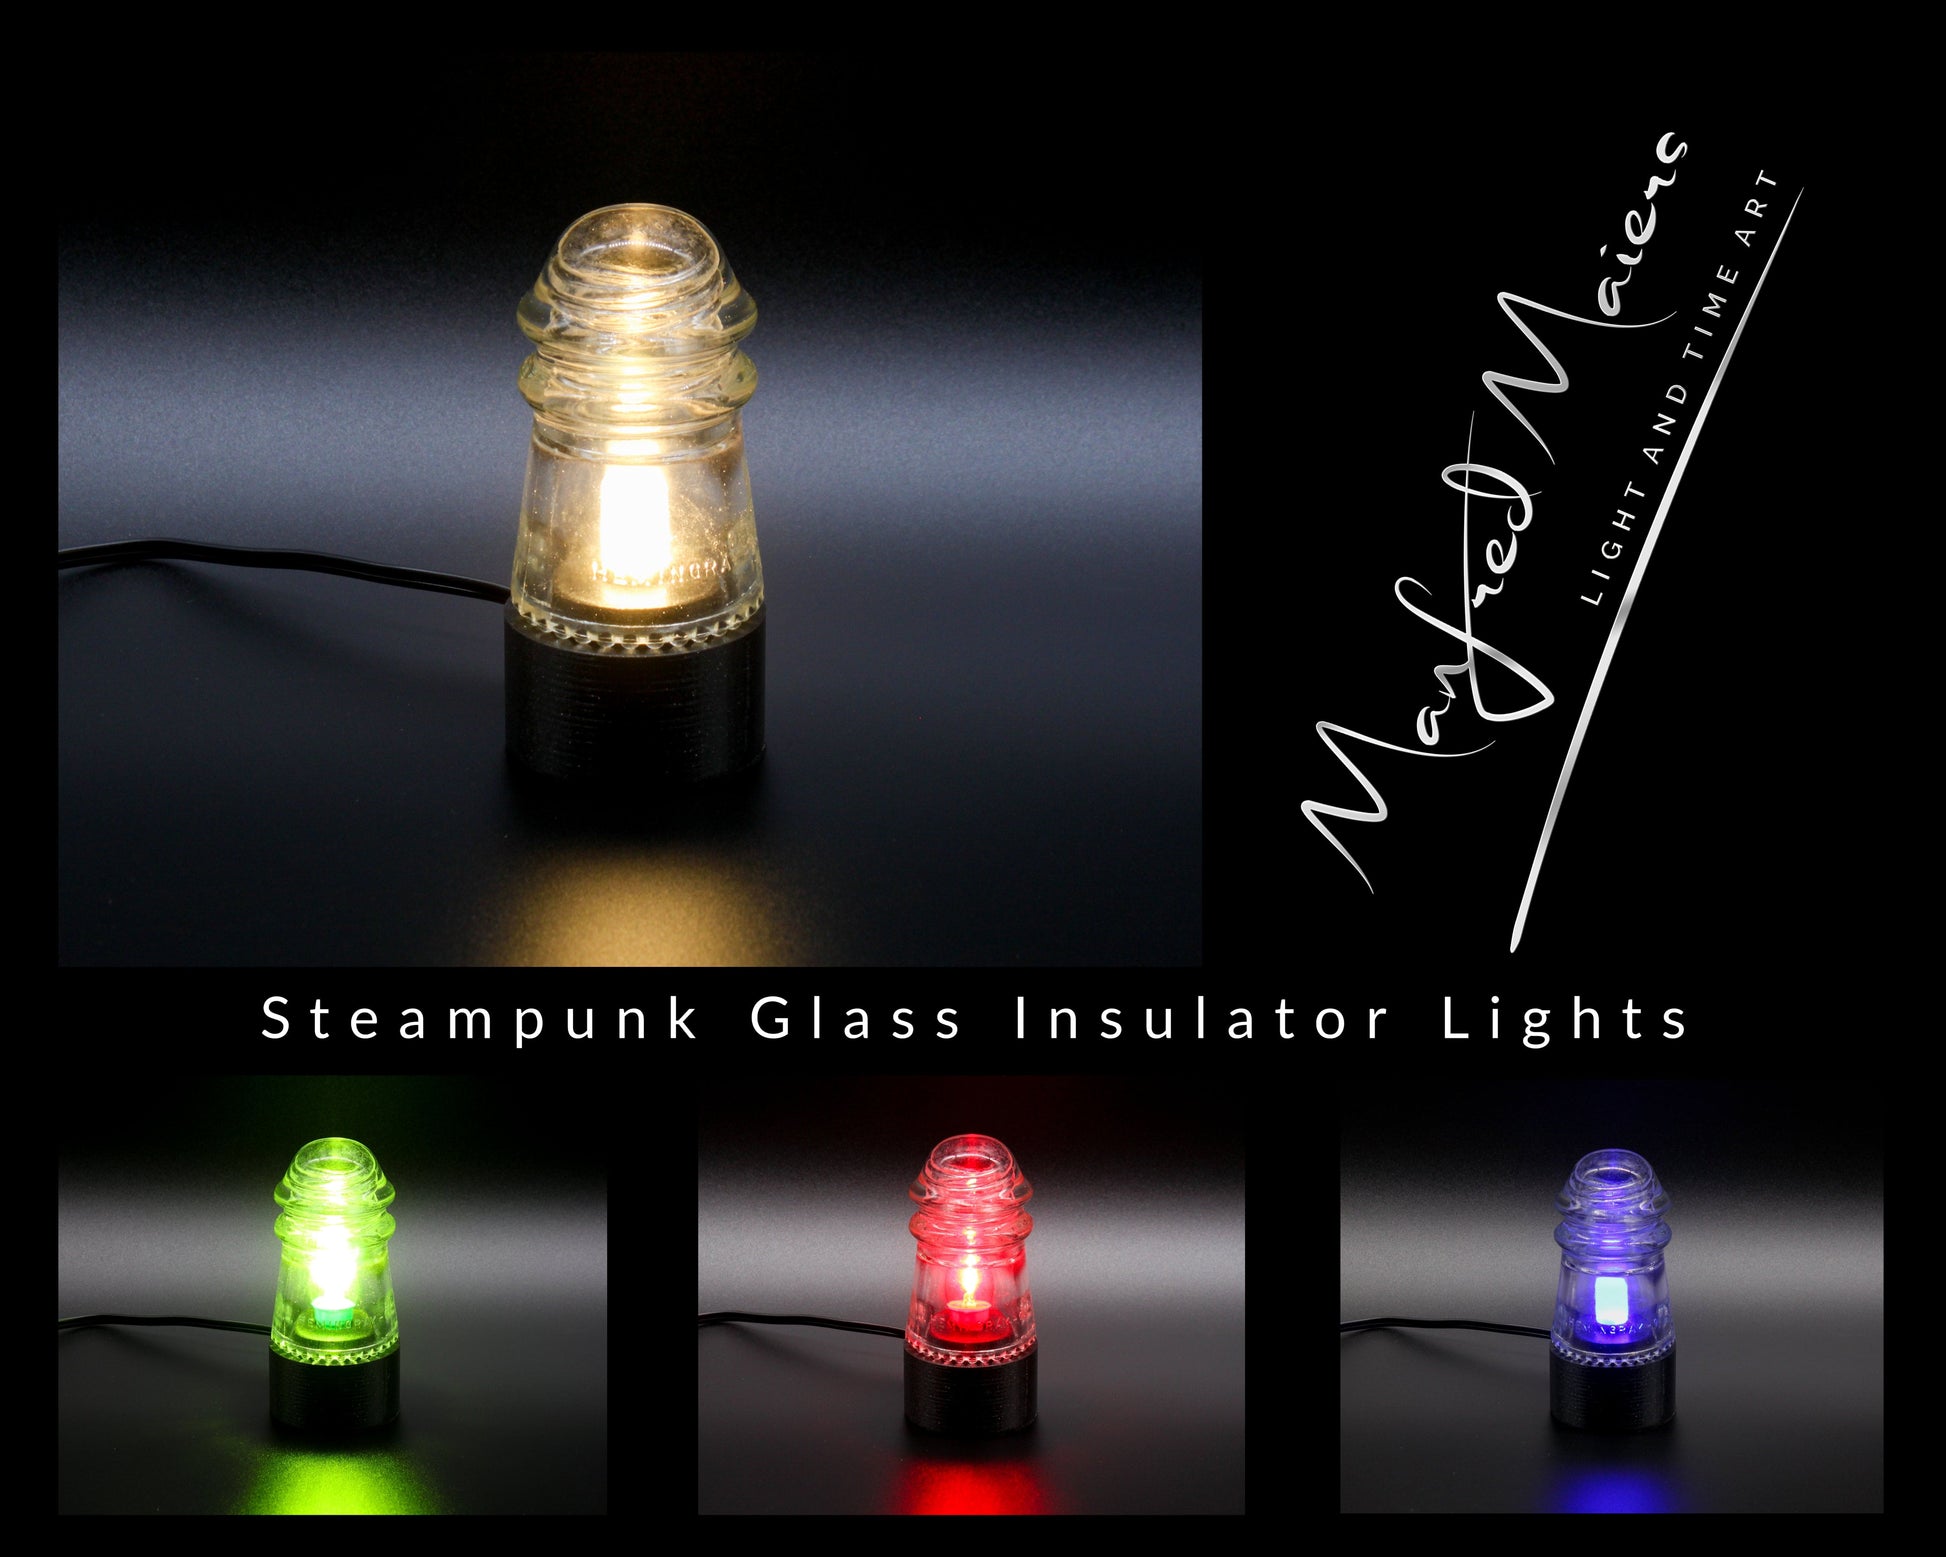 LightAndTimeArt Industrial lamp "The Small Lantern" Clear Insulator Lamp, Industrial Lighting, Man Cave Deco, Neo Victorian Lamp design, Cyberpunk Lamp